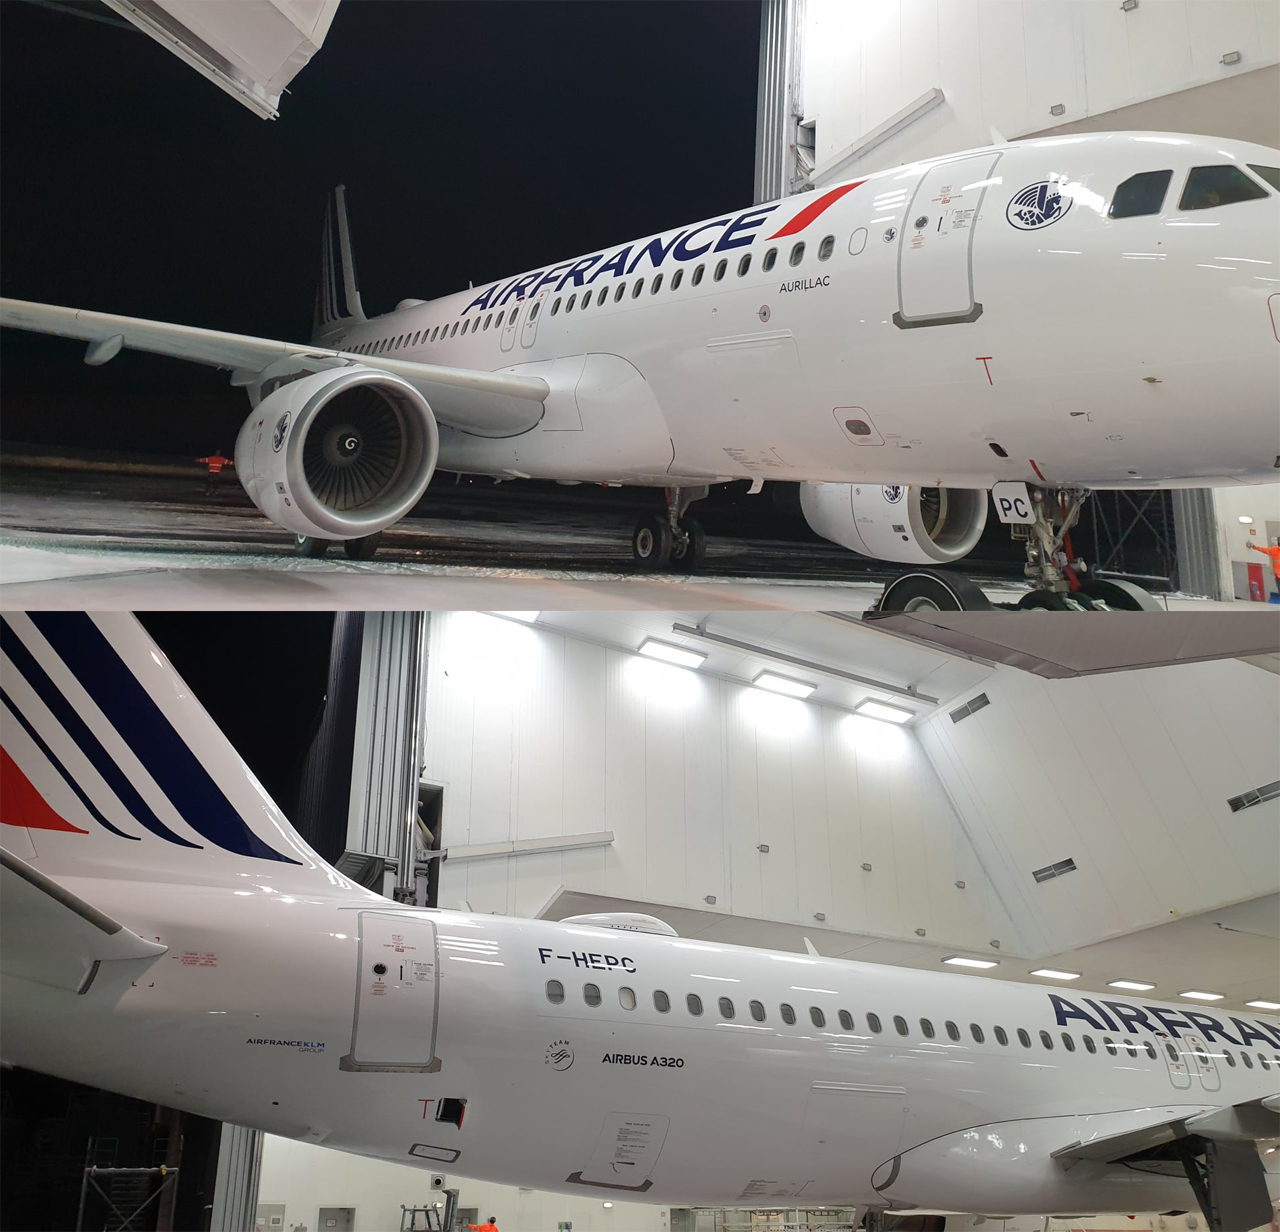 Air France A320new